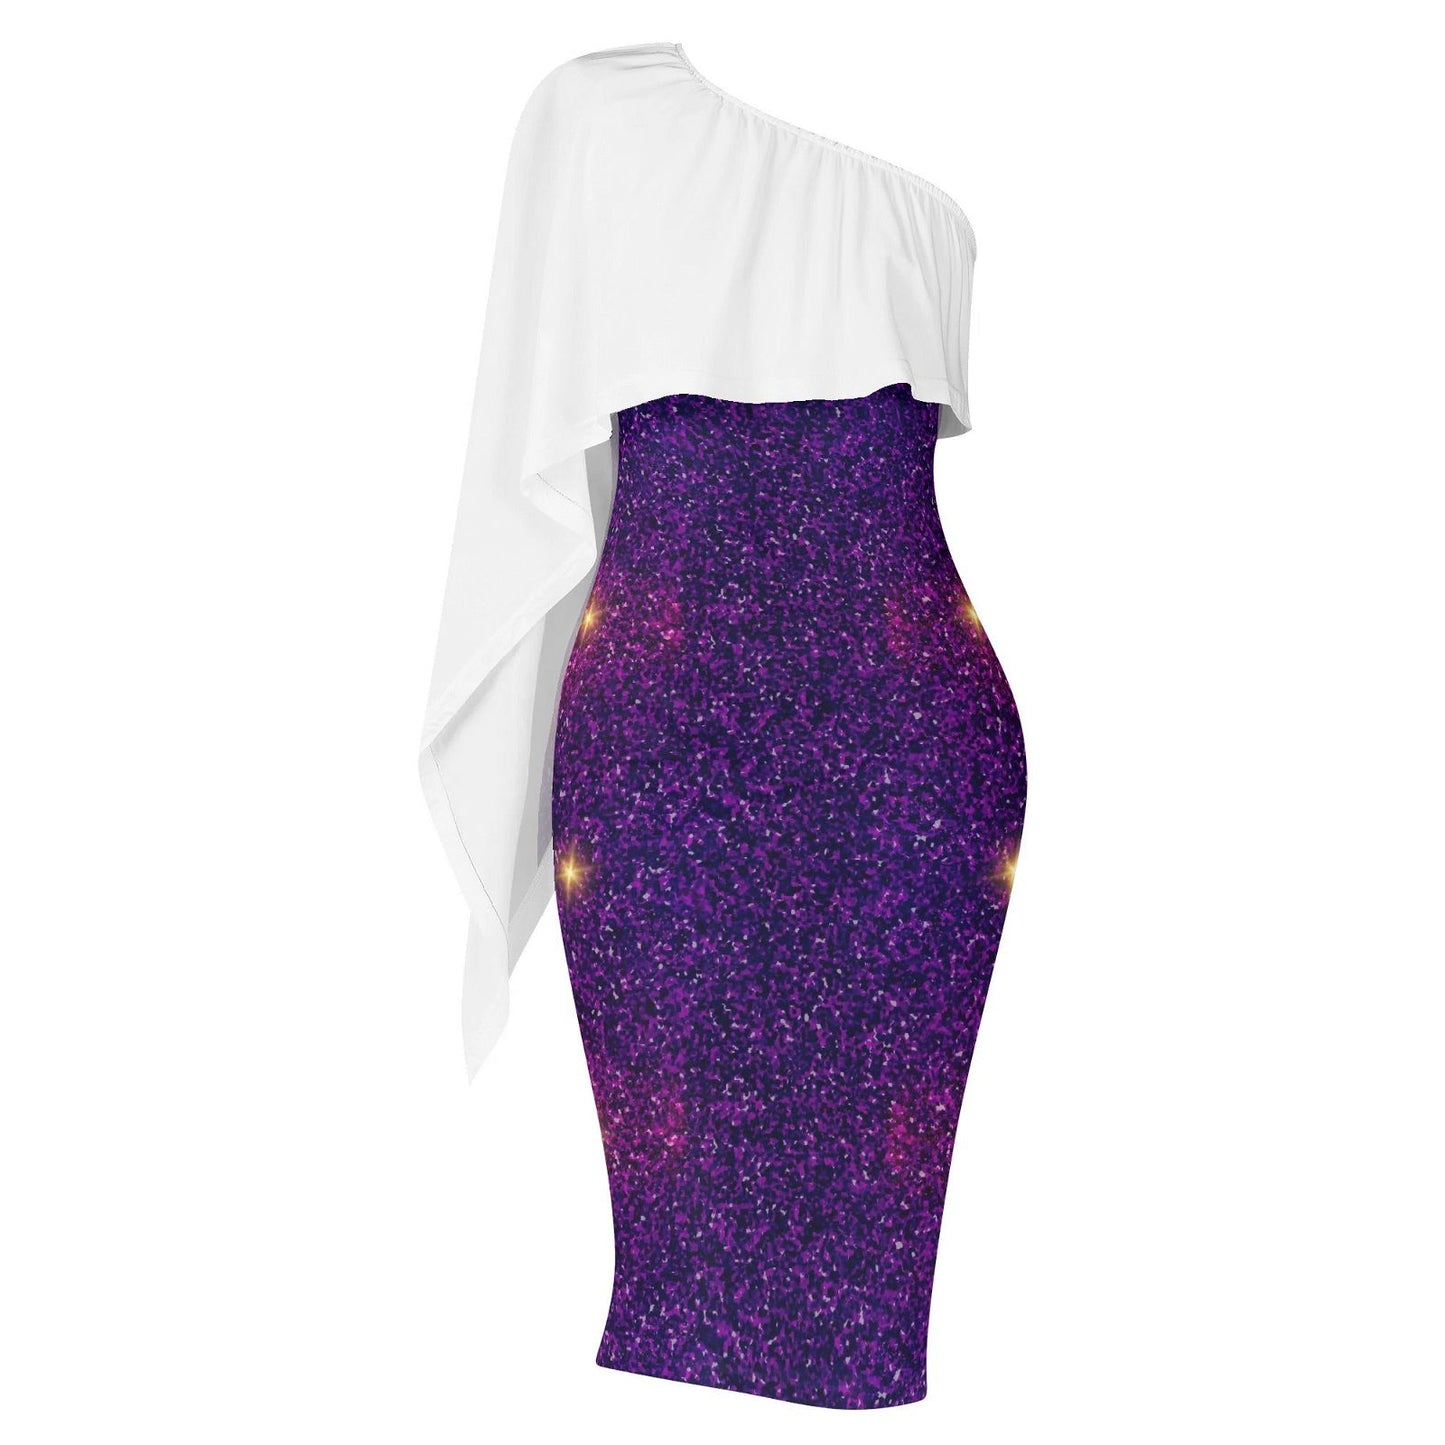 Elegant White Purple One Shoulder Evening Dress - Formal Gown for Women - Iron Phoenix GHG